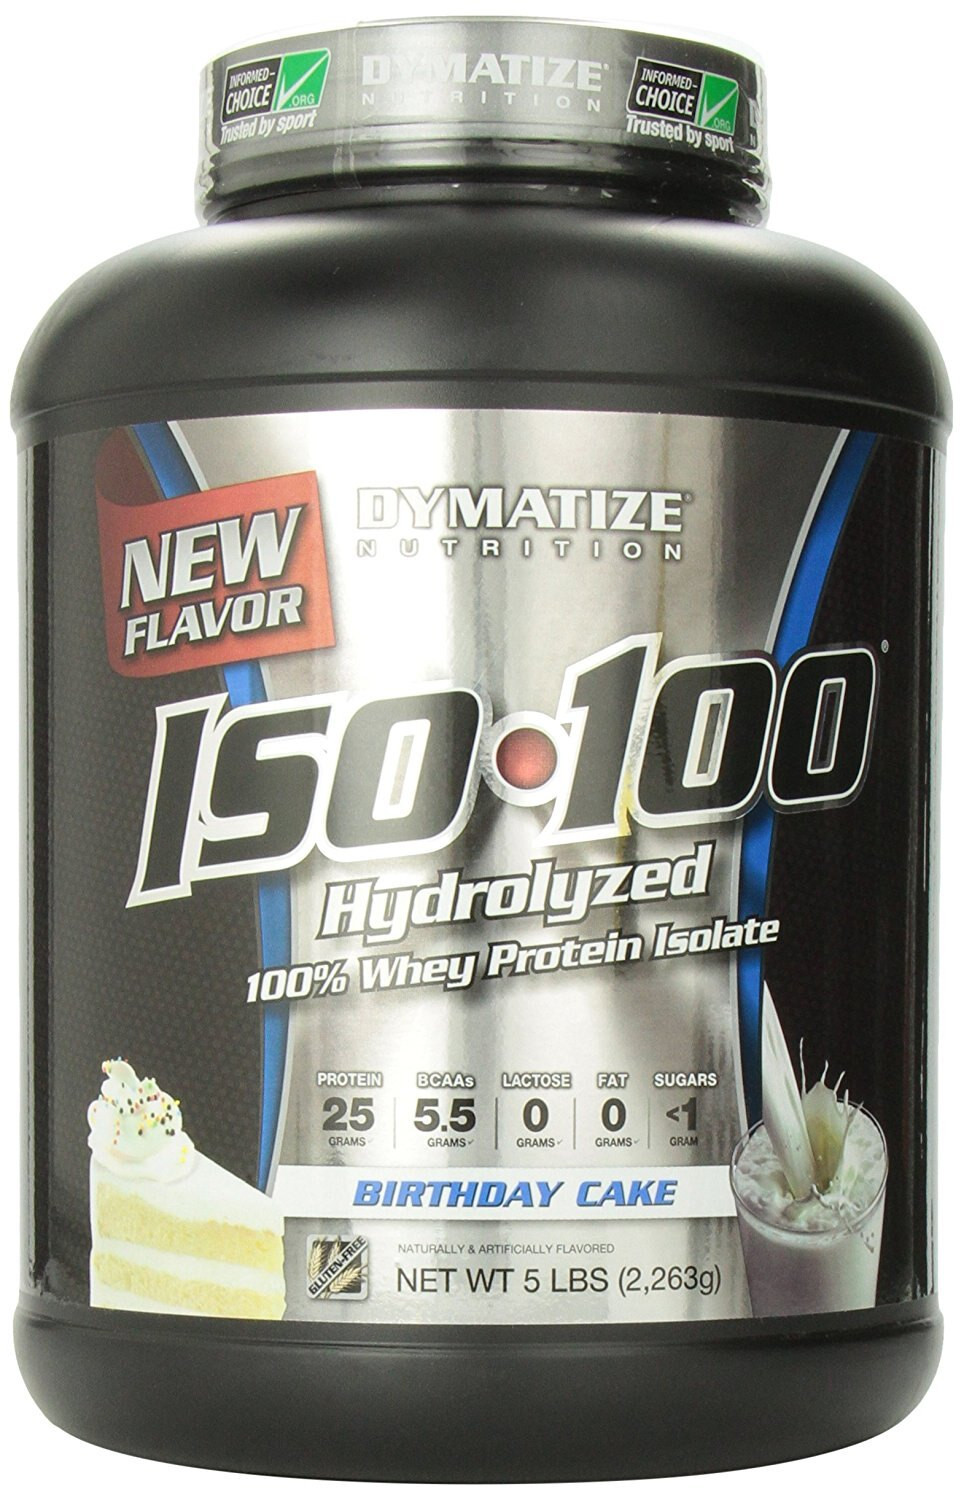 Dymatize Iso 100 Birthday Cake
 Cheapees Dymatize Iso 100 Birthday Cake 5 lbs 2263g